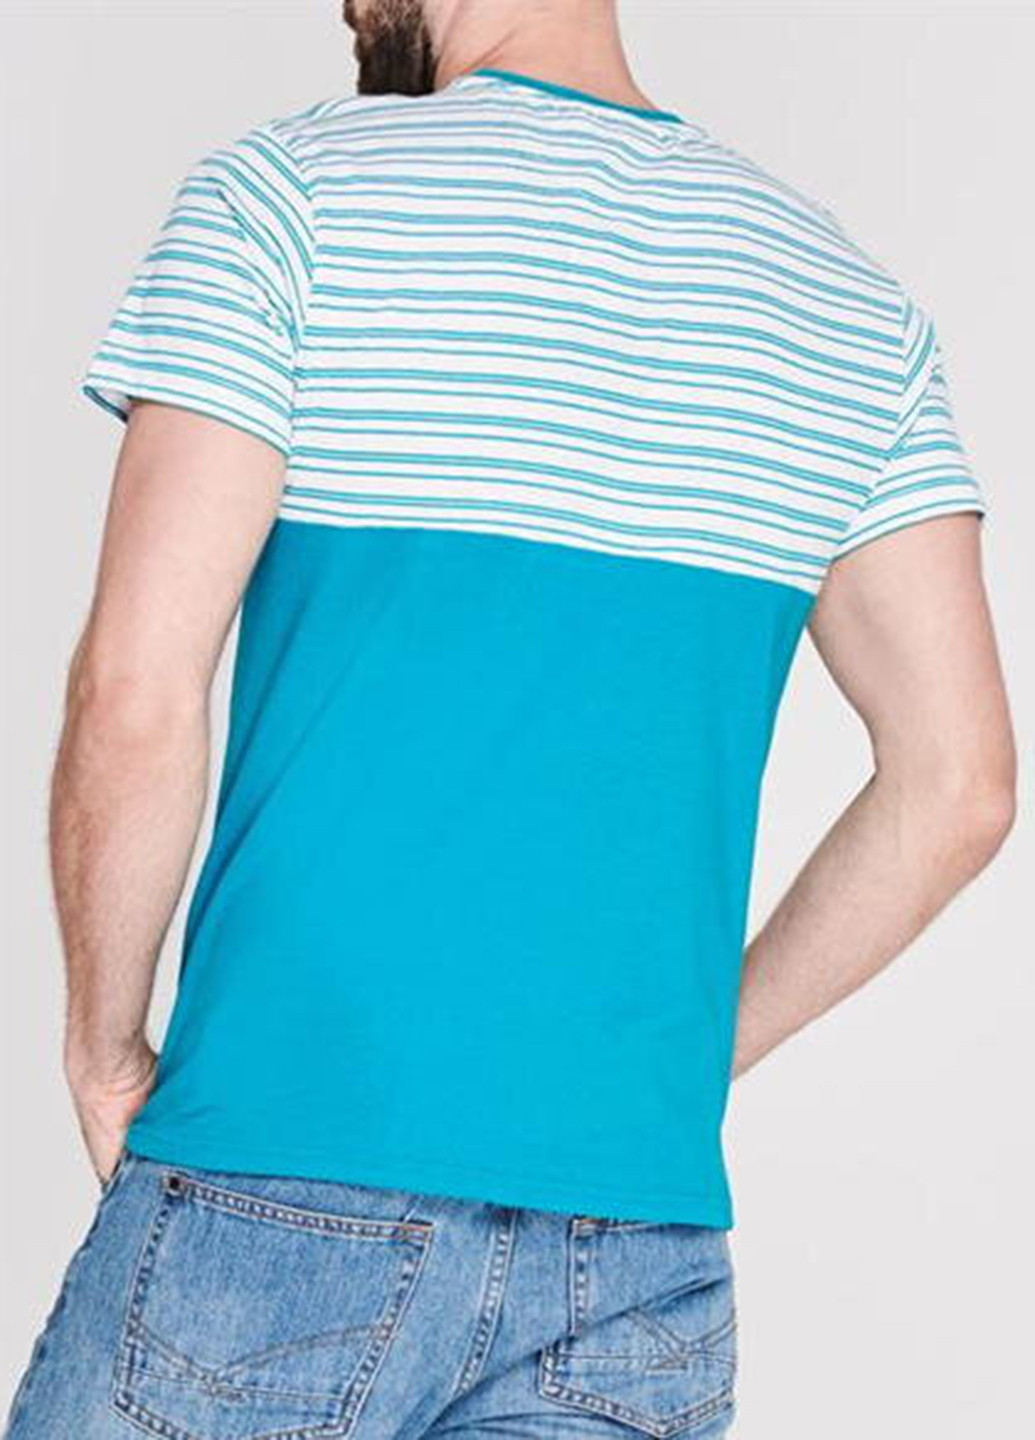 Голубая футболка Pierre Cardin